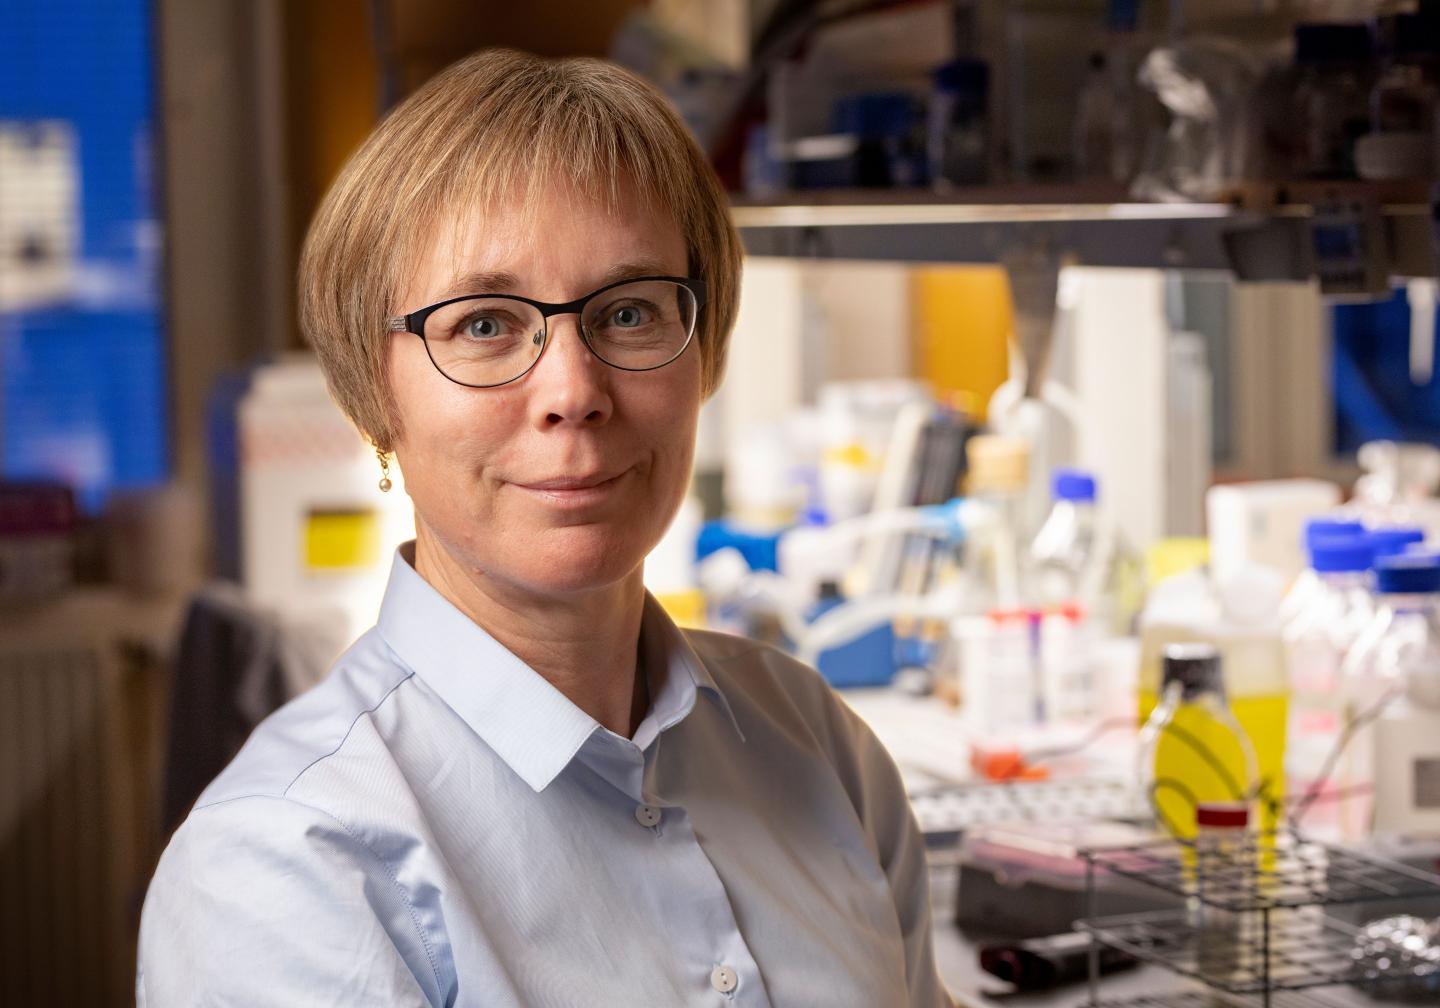 Karin Forsberg Nilsson, Professor at Department of Immunology, Genetics and Pathology, Uppsala University